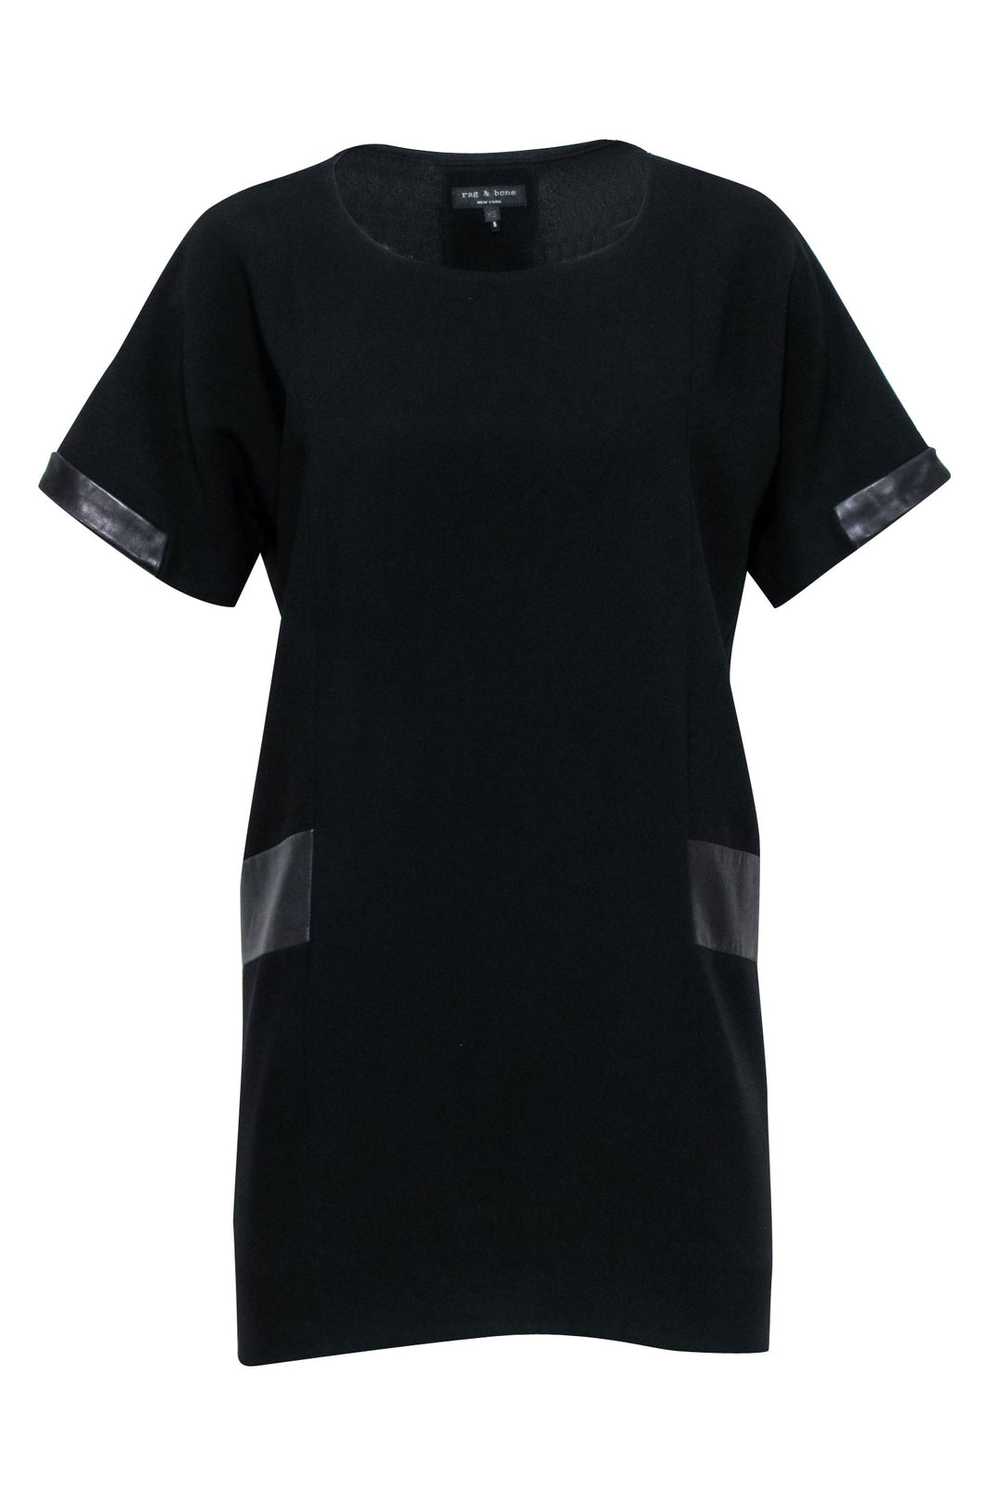 Rag & Bone - Black Shift Dress w/ Lamb Leather Tr… - image 1